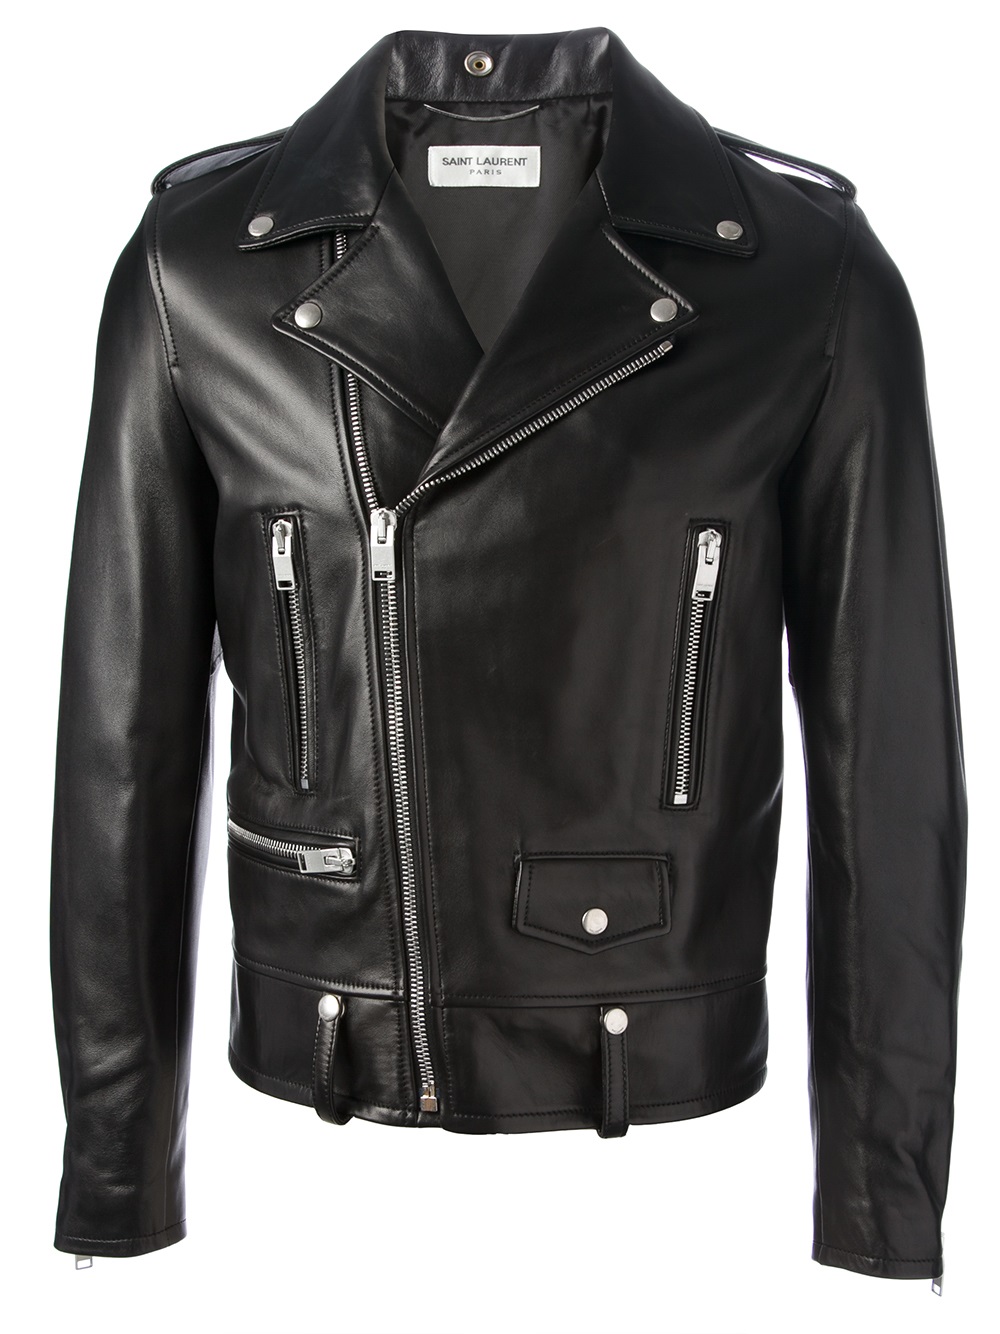 Saint Laurent Slim Leather Jacket in Black for Men - Lyst